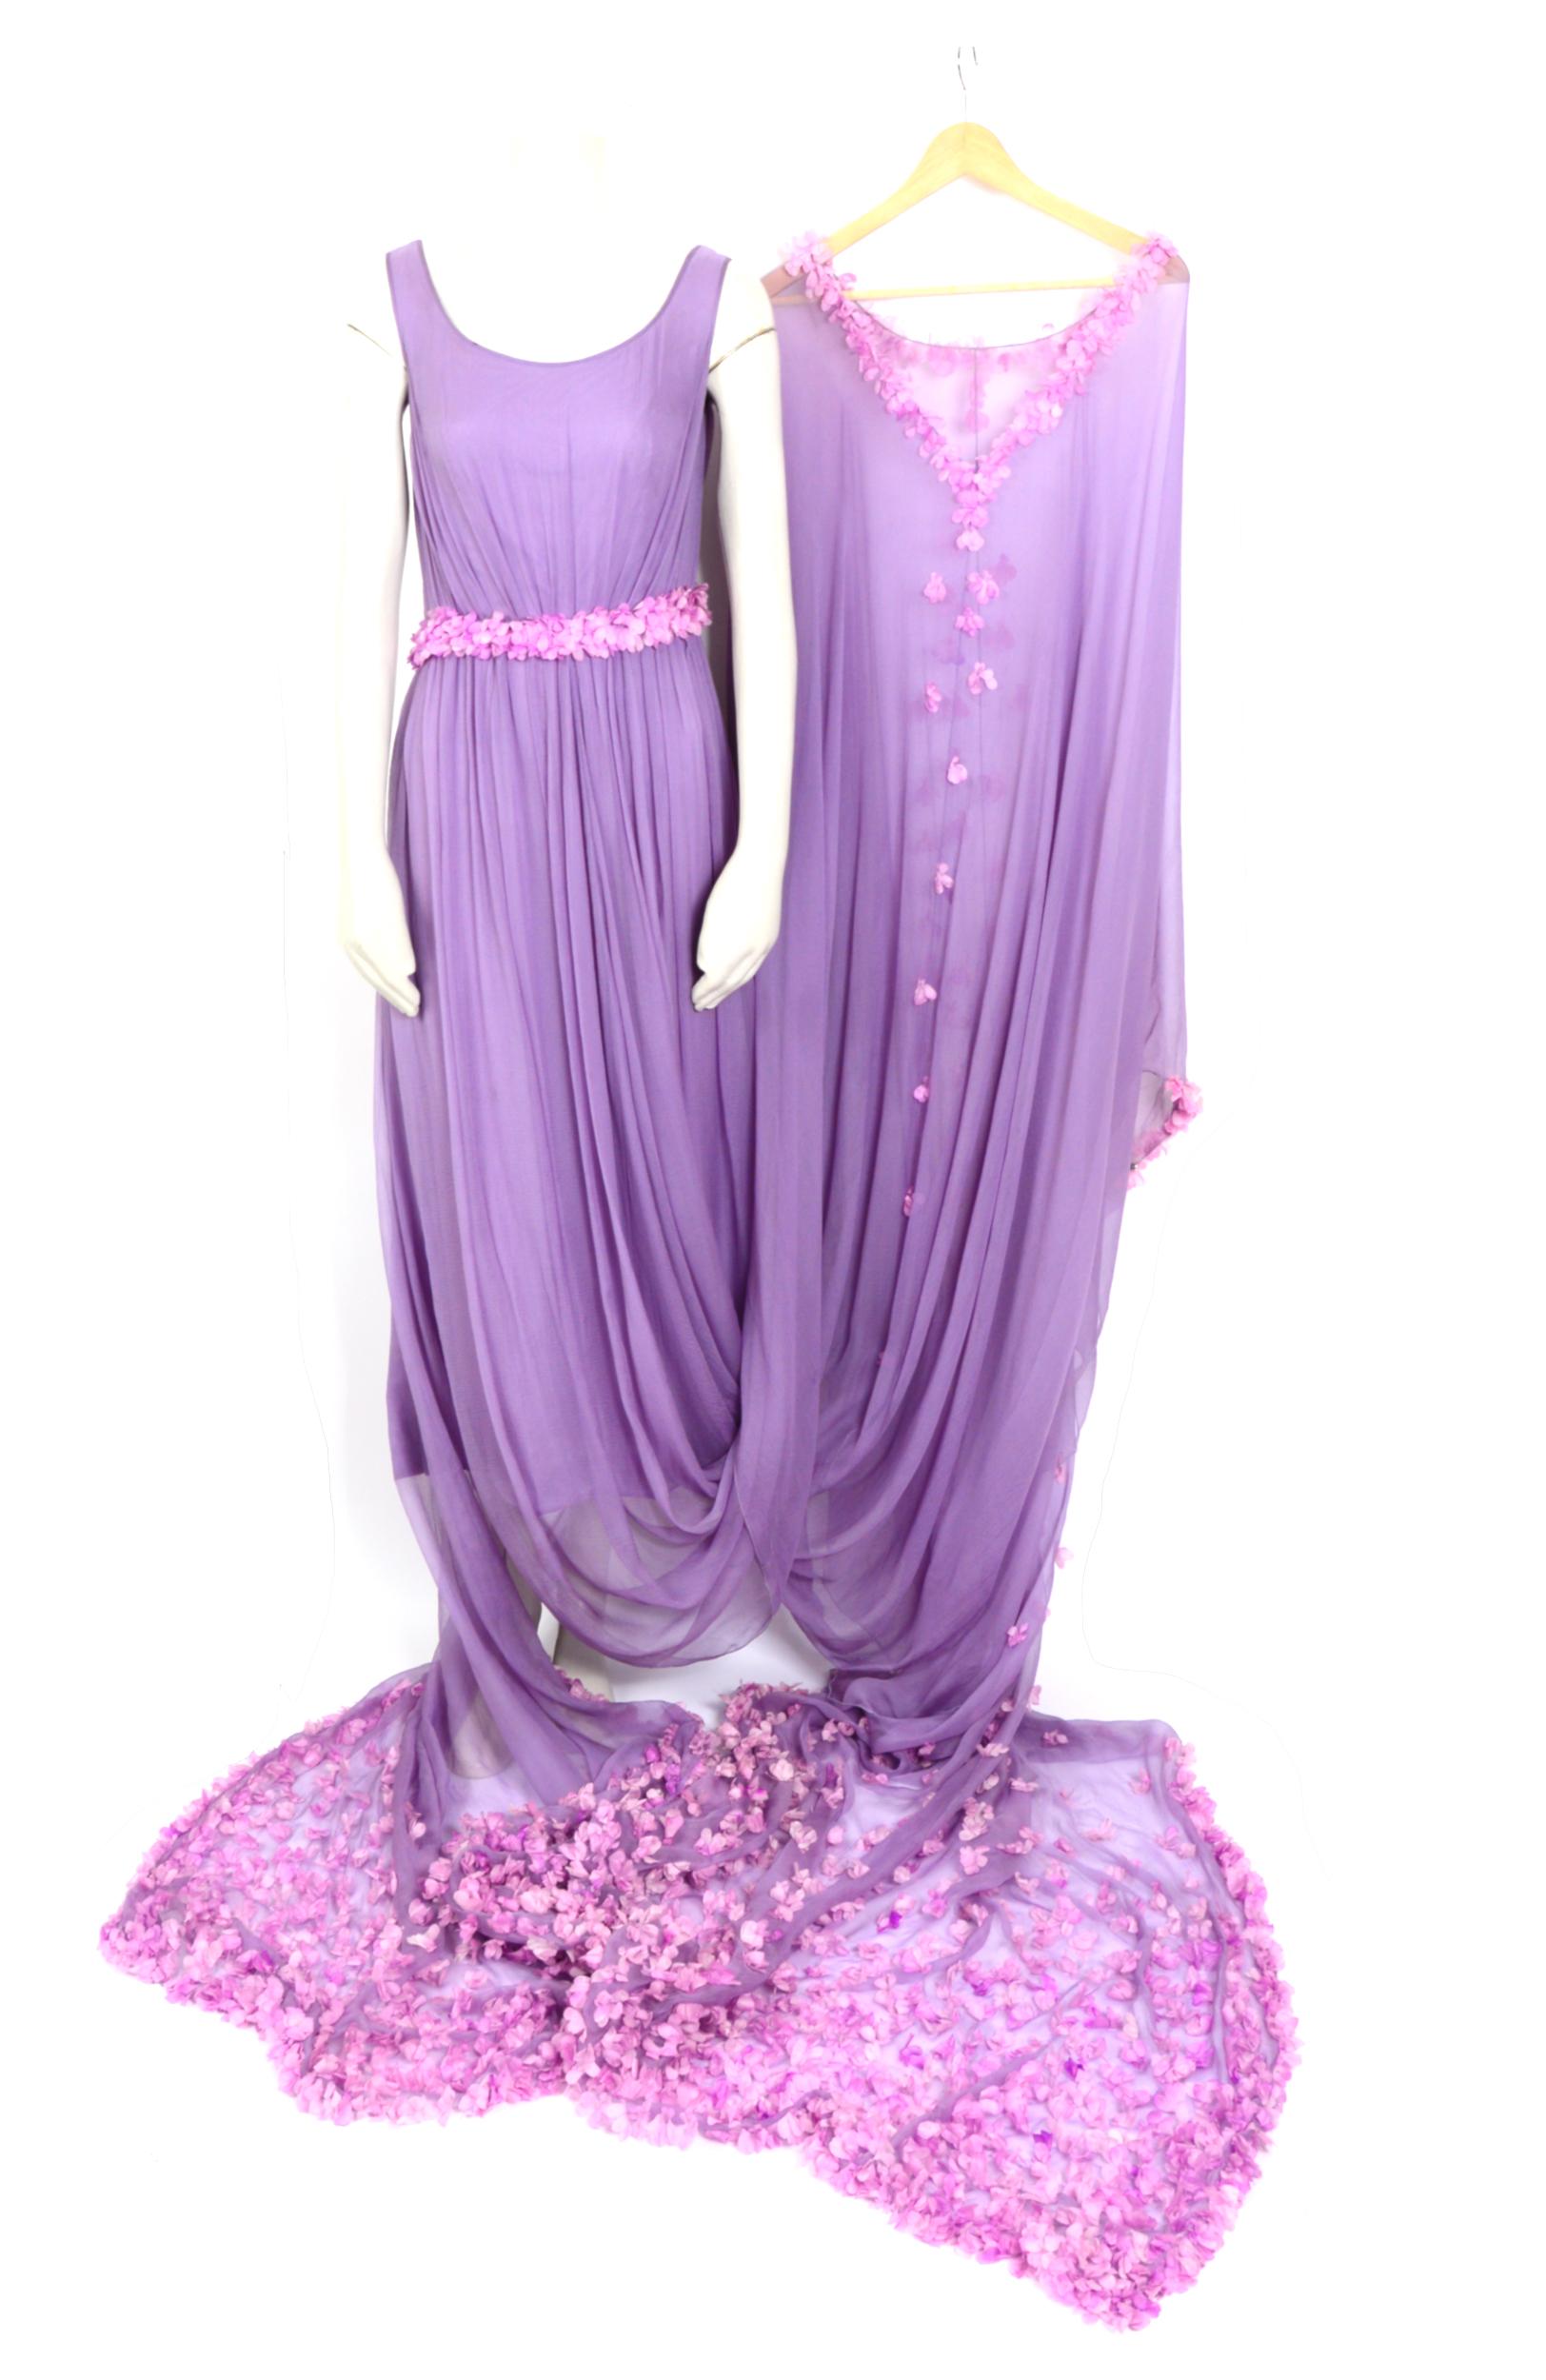 Valentino 1960s costume made silk lilac kaftan dress flower embellished train   For Sale 7